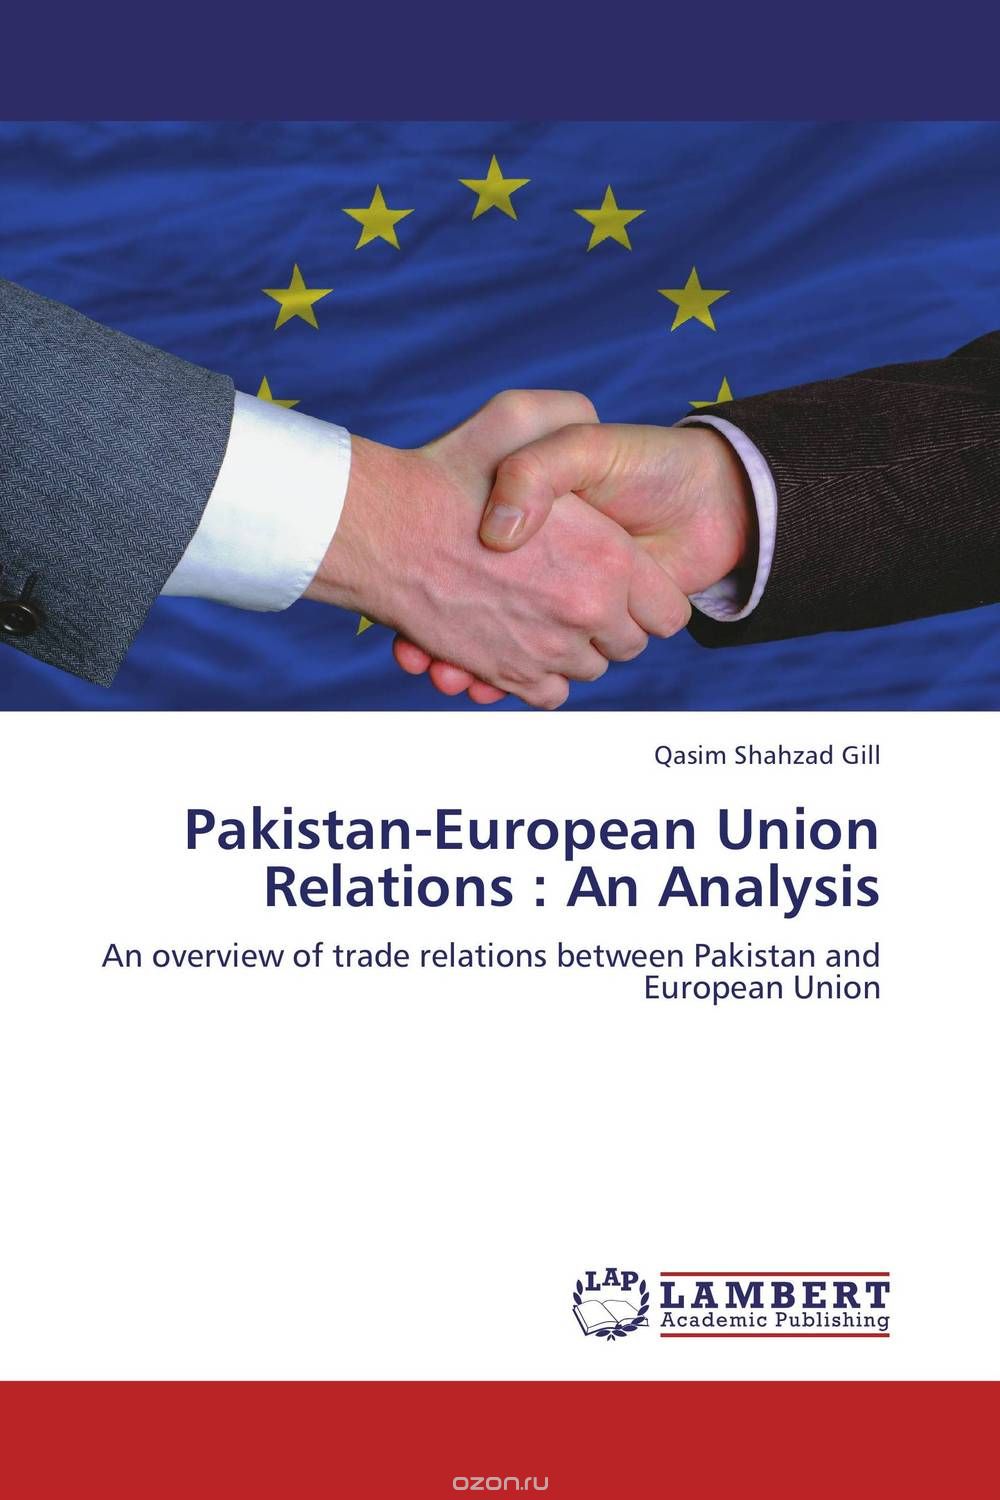 Скачать книгу "Pakistan-European Union Relations : An Analysis"